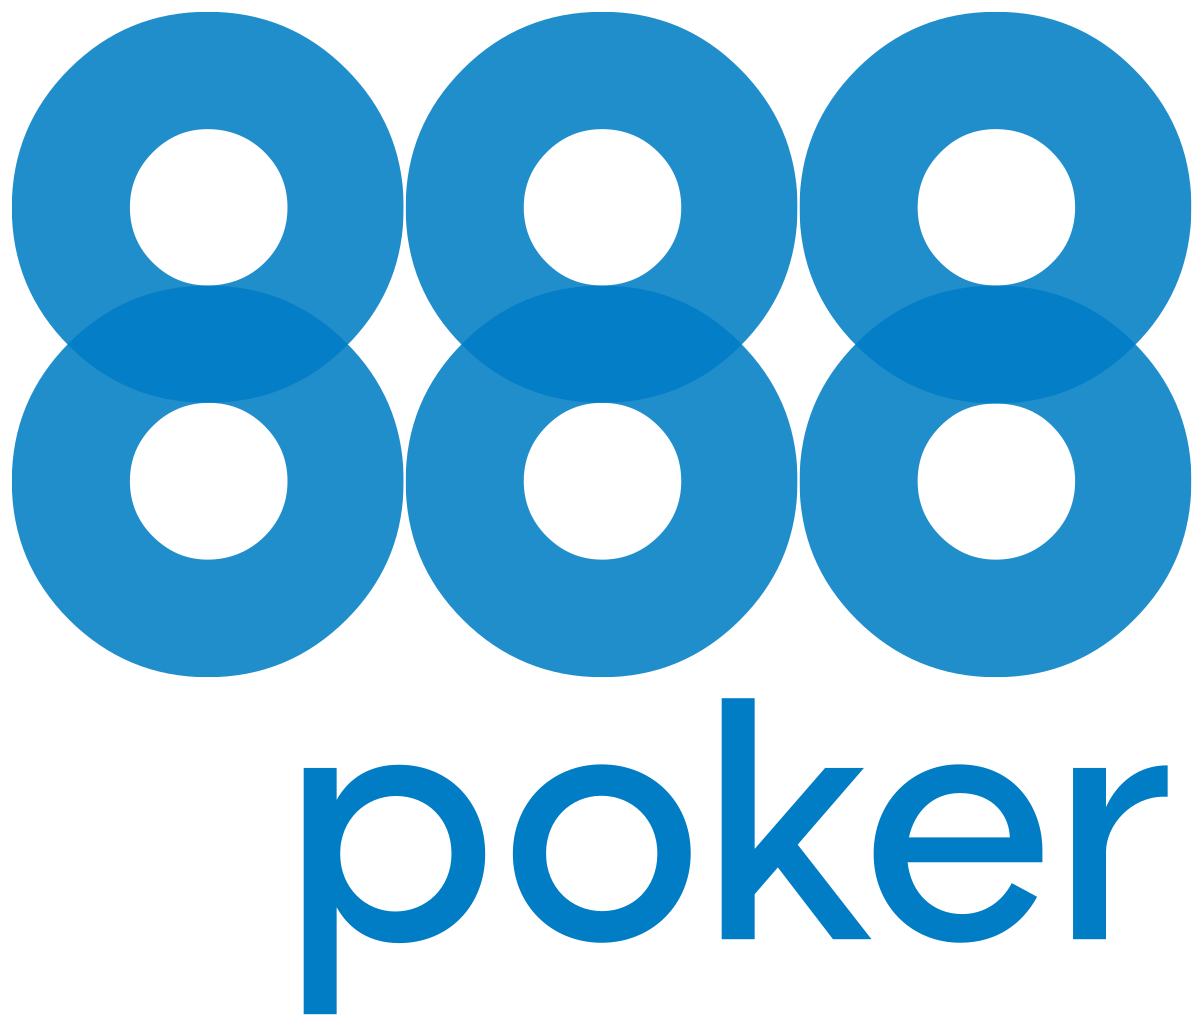 888 Poker no deposit bonus